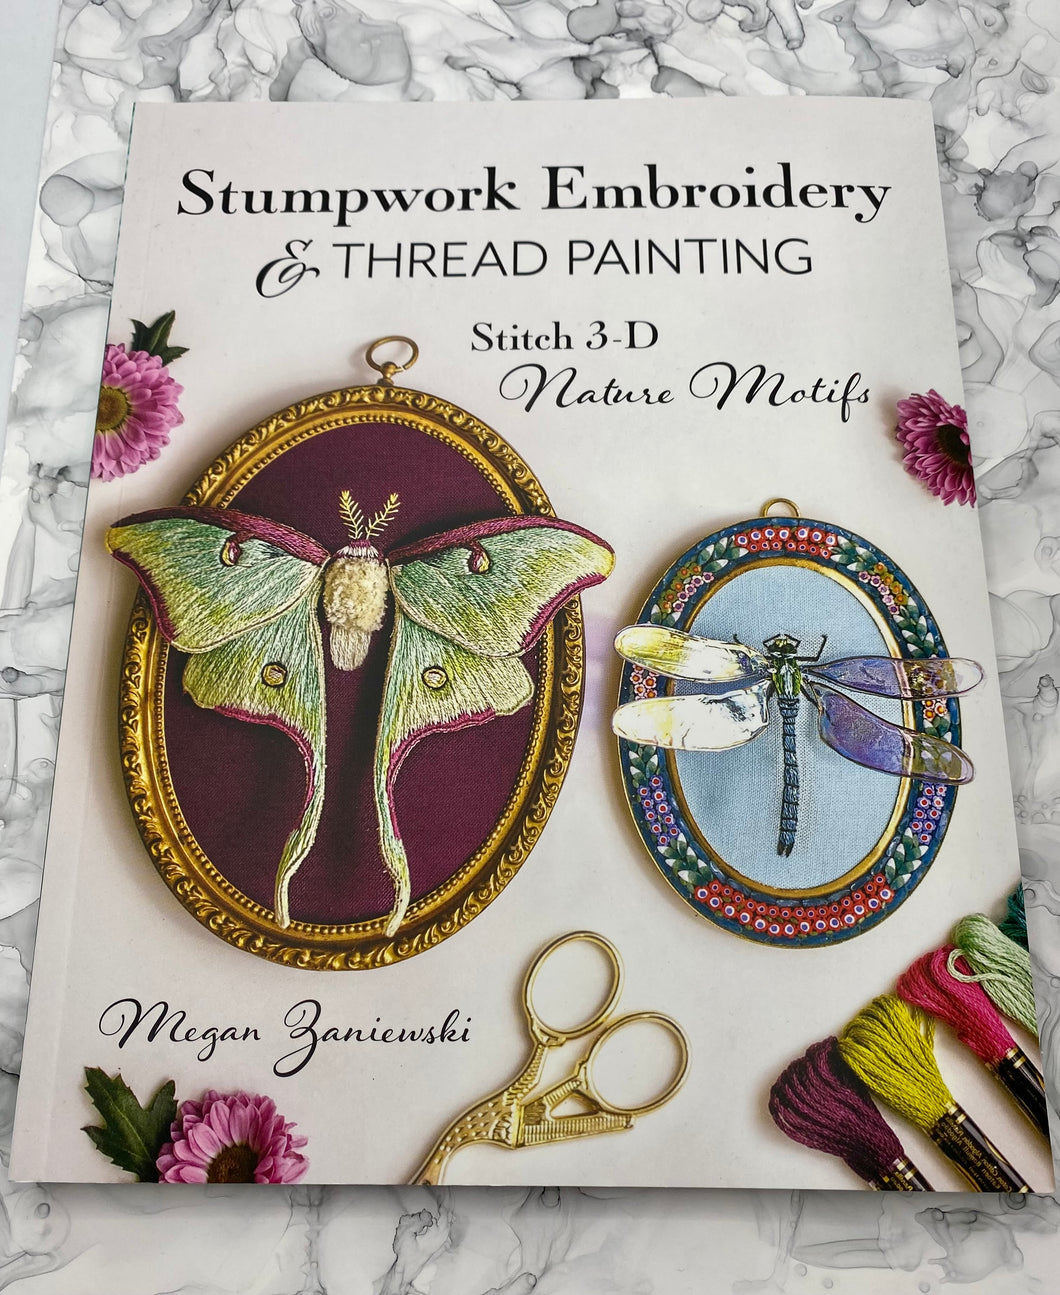 Stumpwork Embroidery & Thread Painting: Stitch 3D Nature Motifs by Megan Zaniewshi